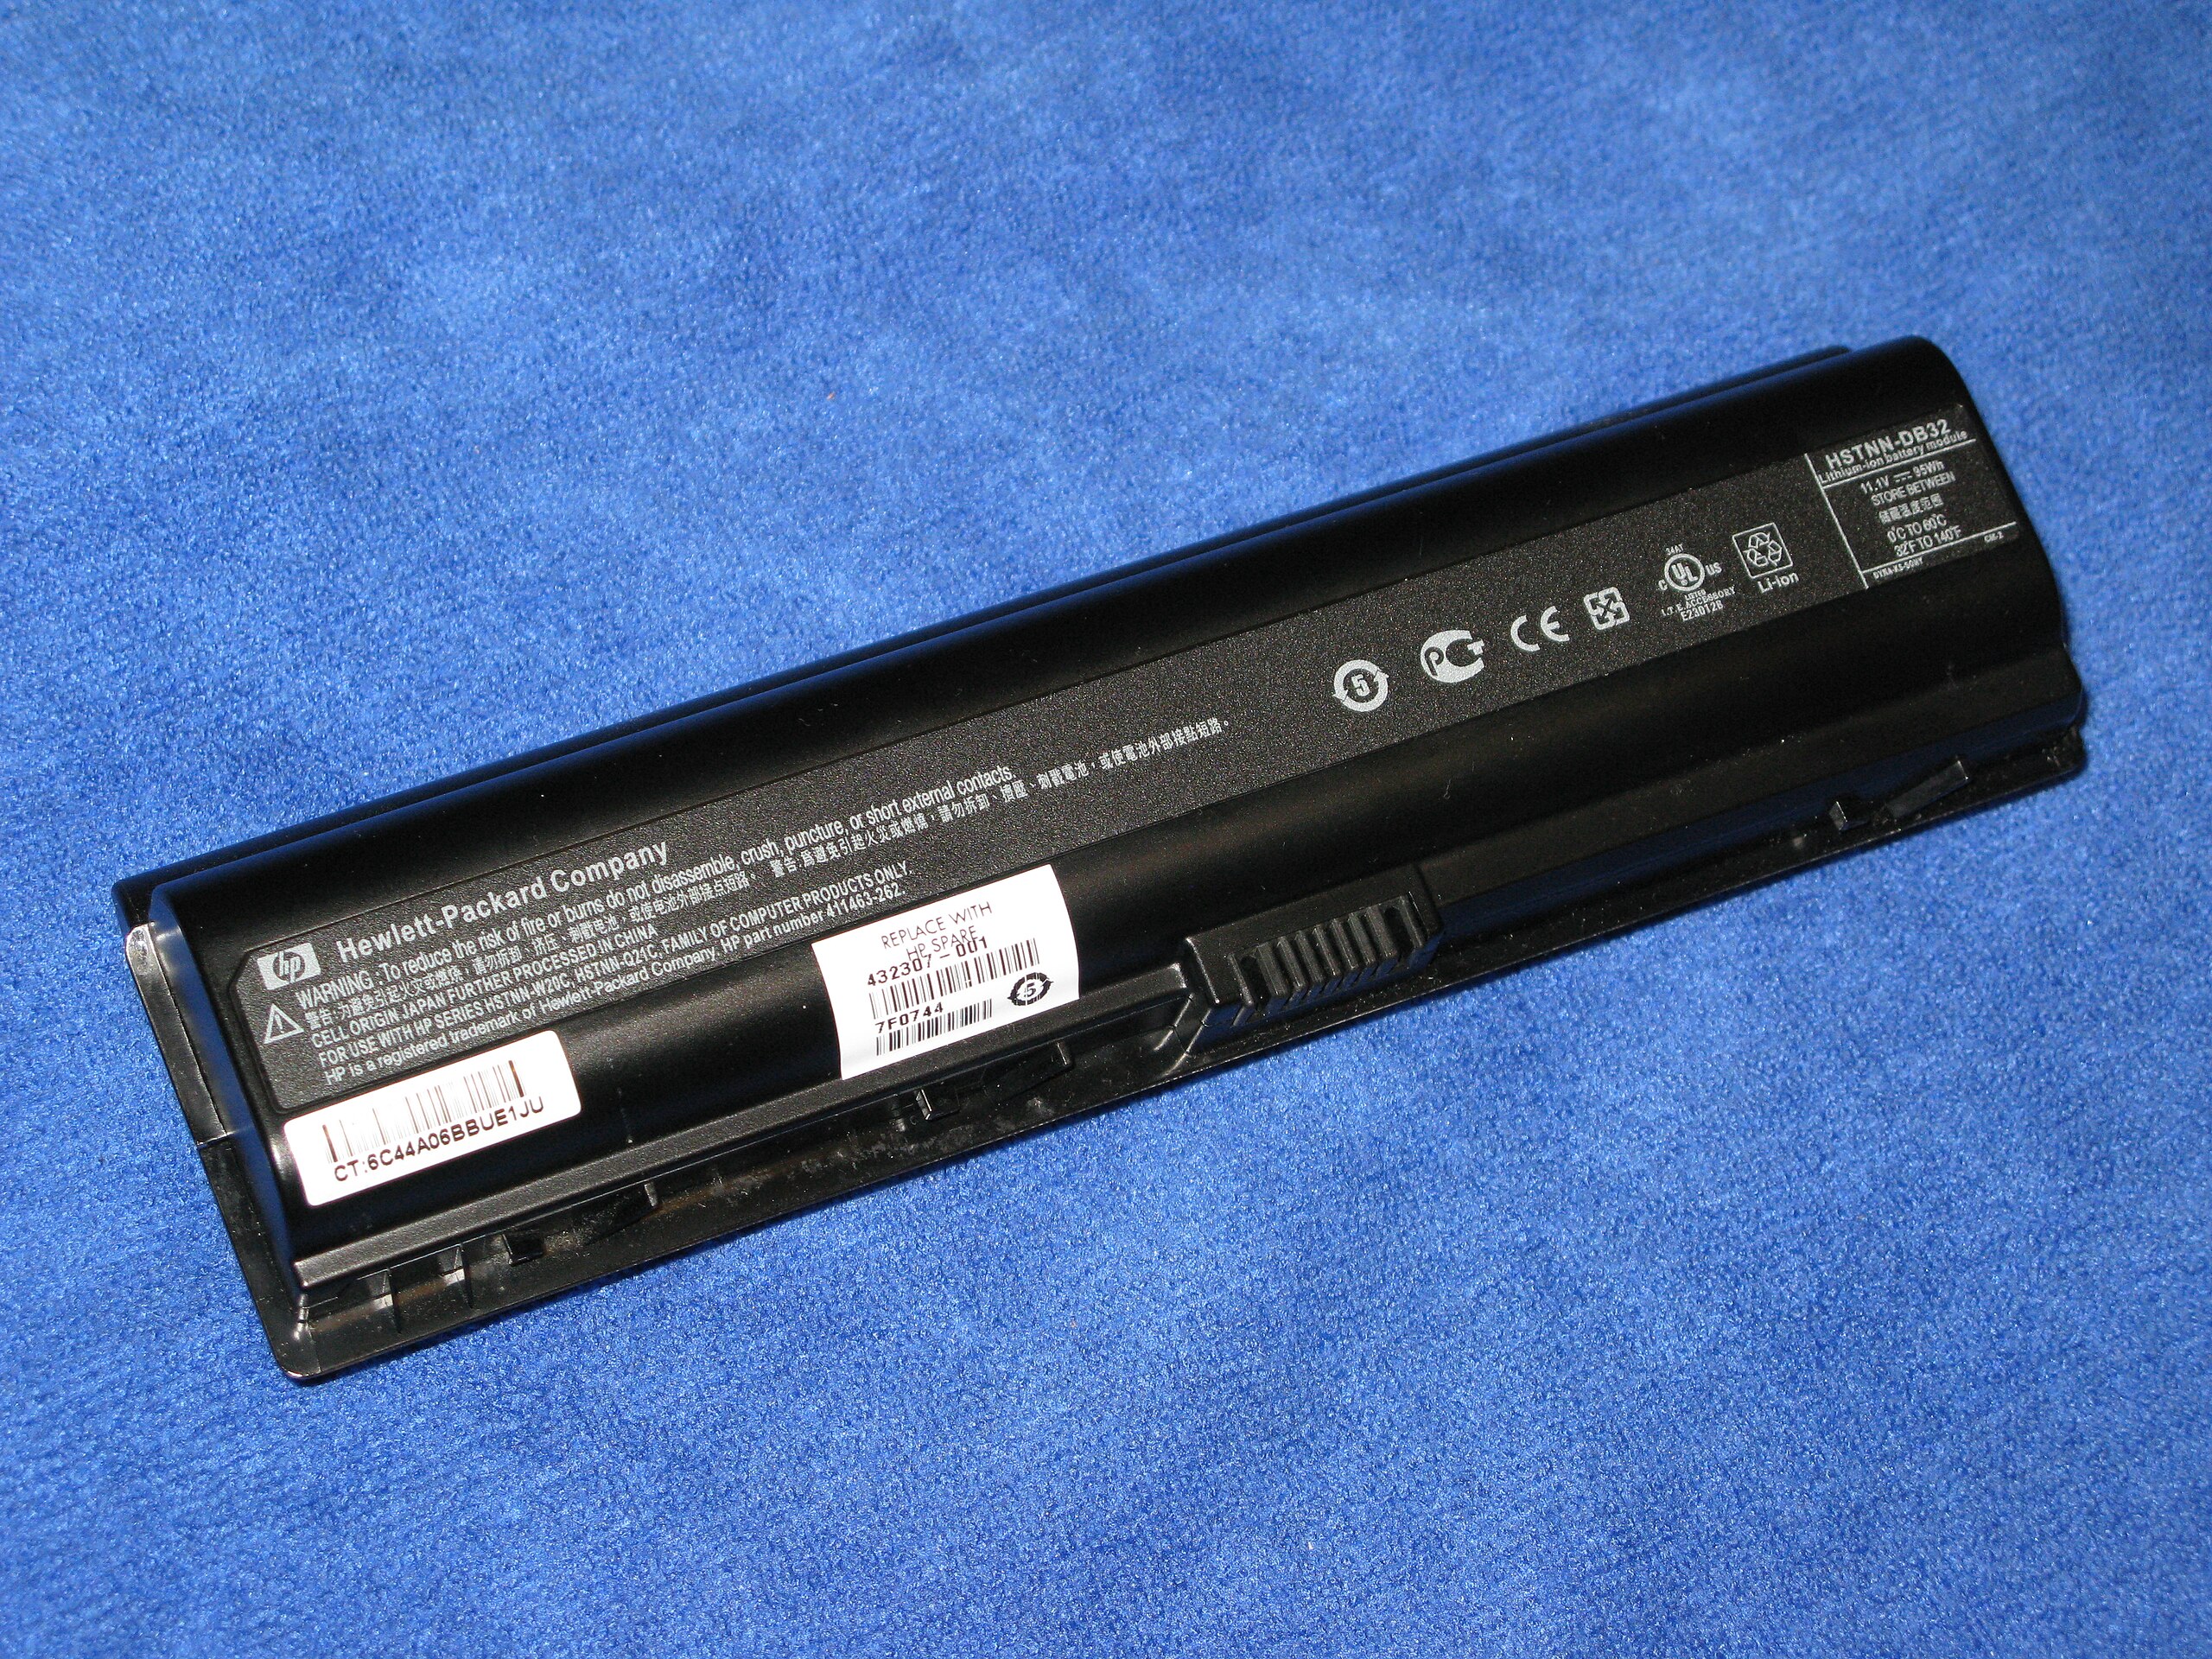 File:HP Laptop Battery.jpg - Wikipedia